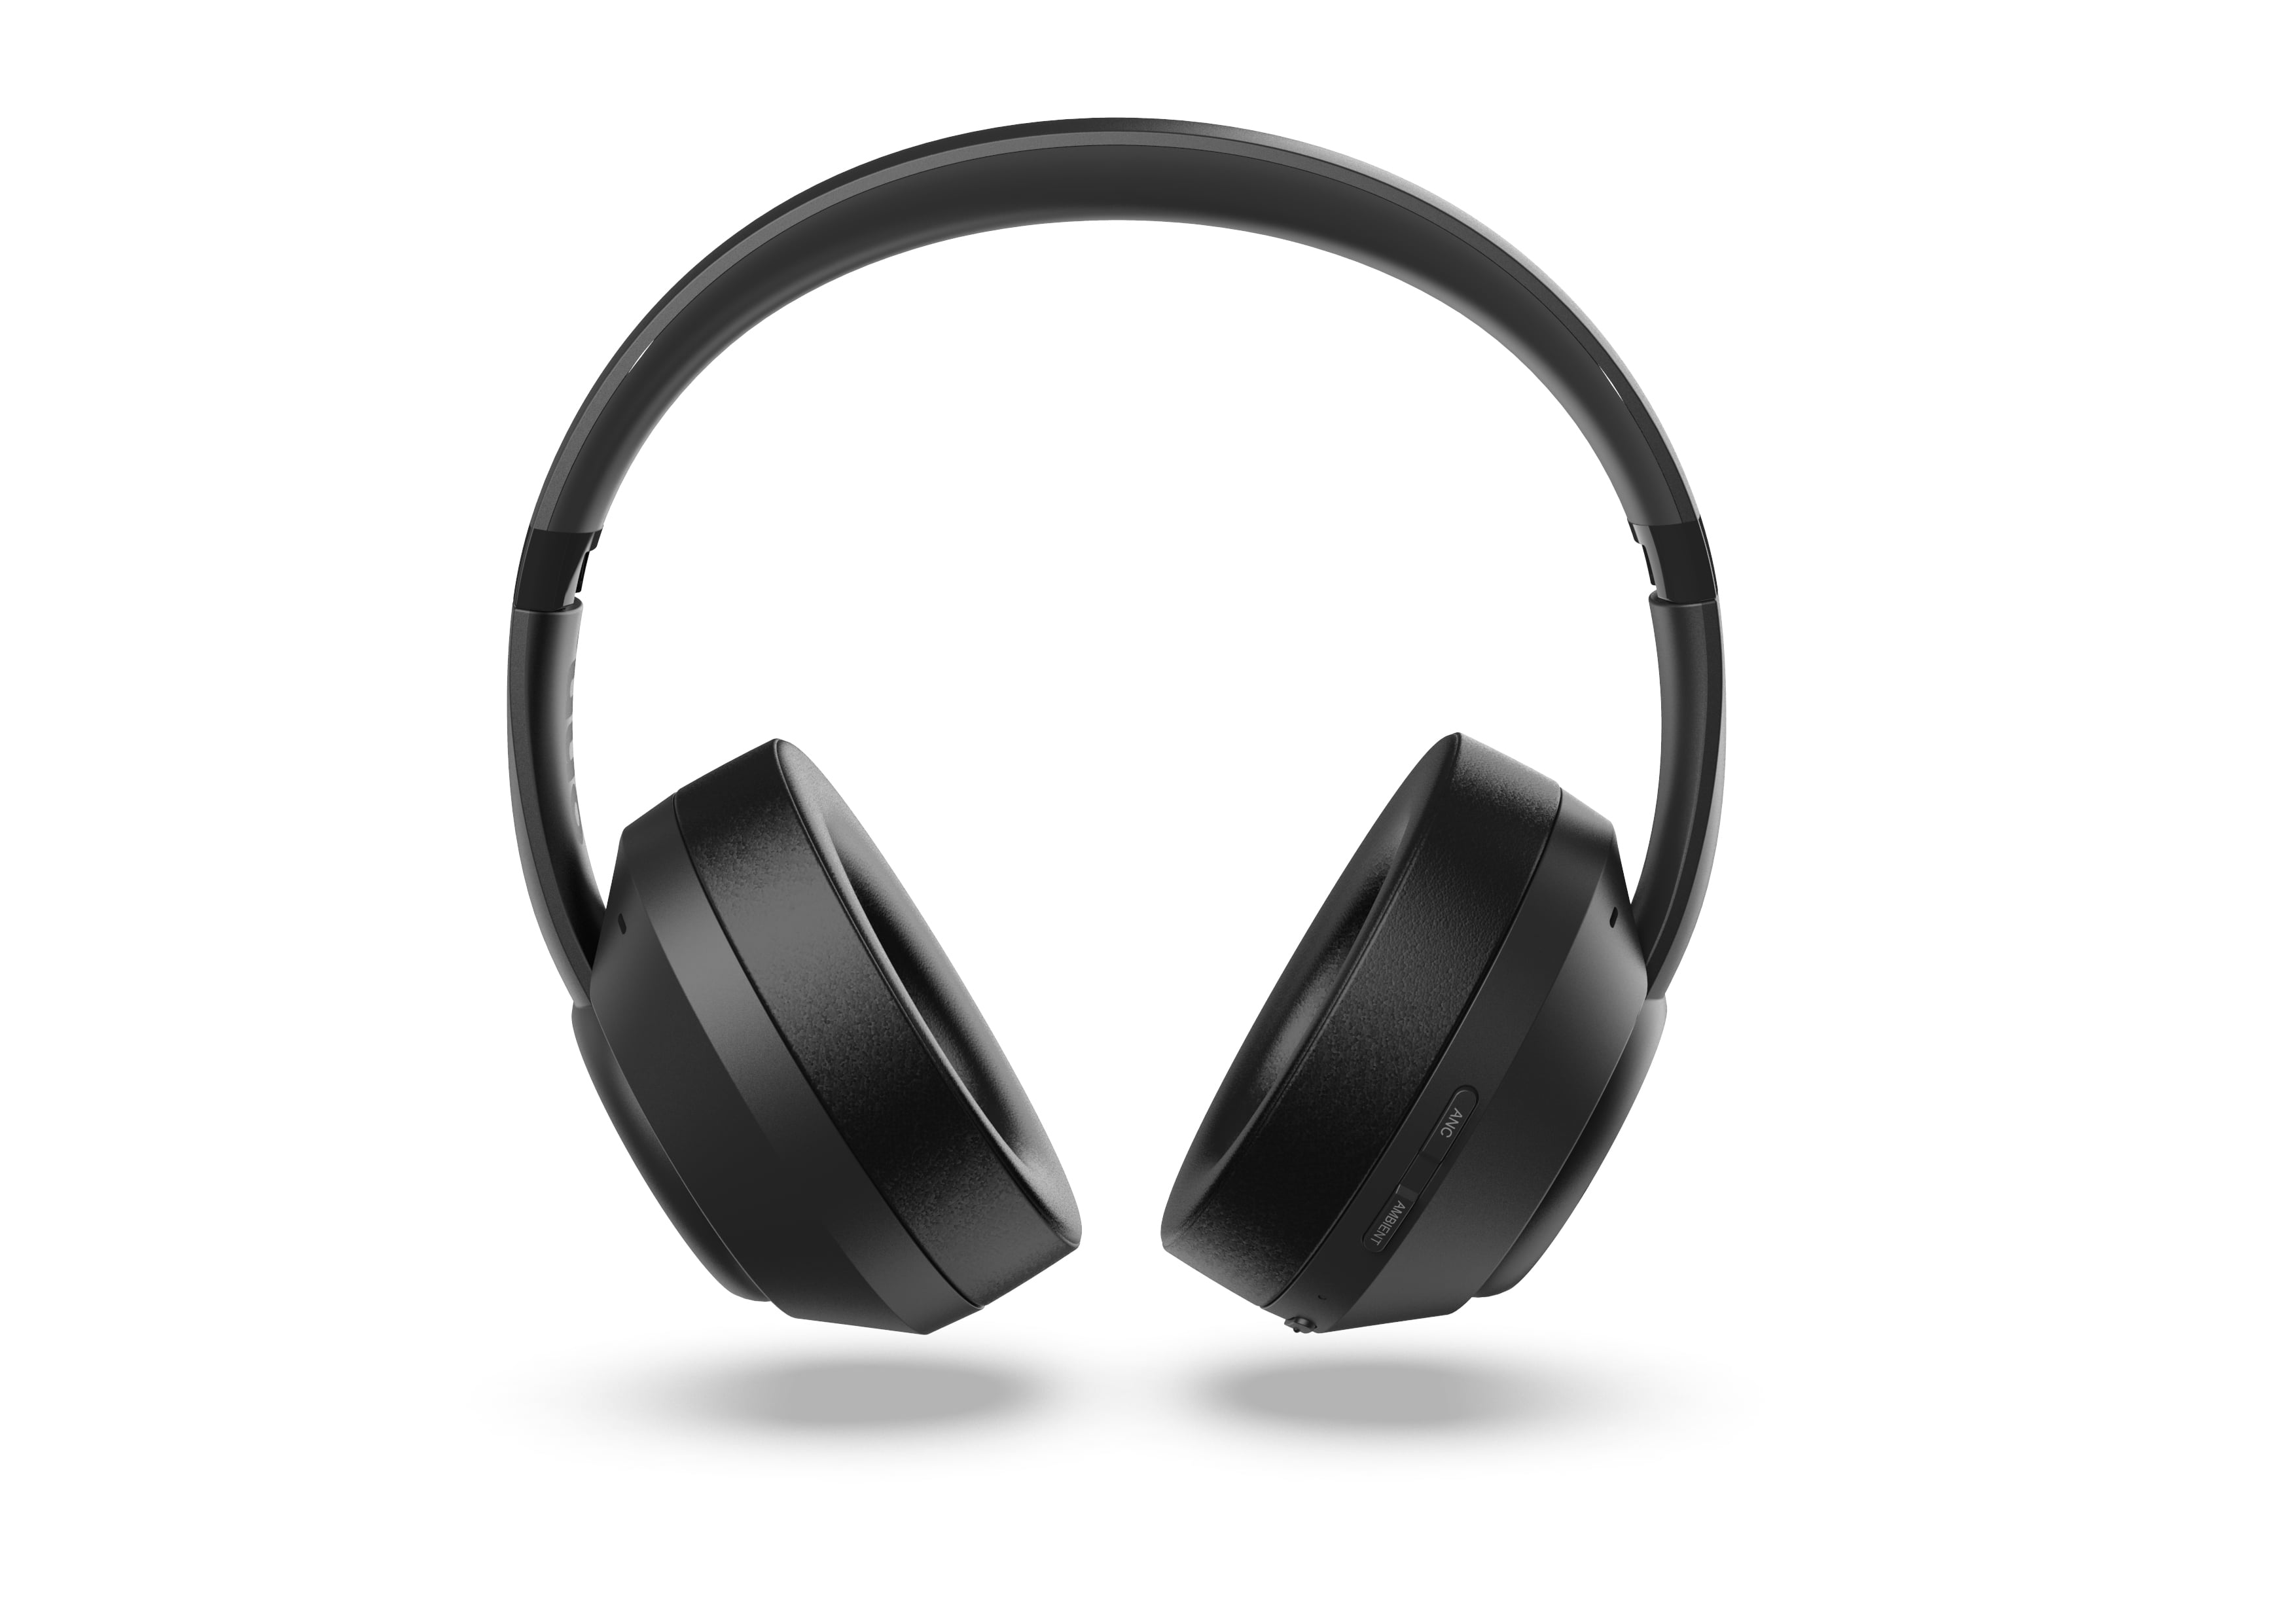 onn. Over Ear Noise Canceling Headphones - Walmart.com - Walmart.com